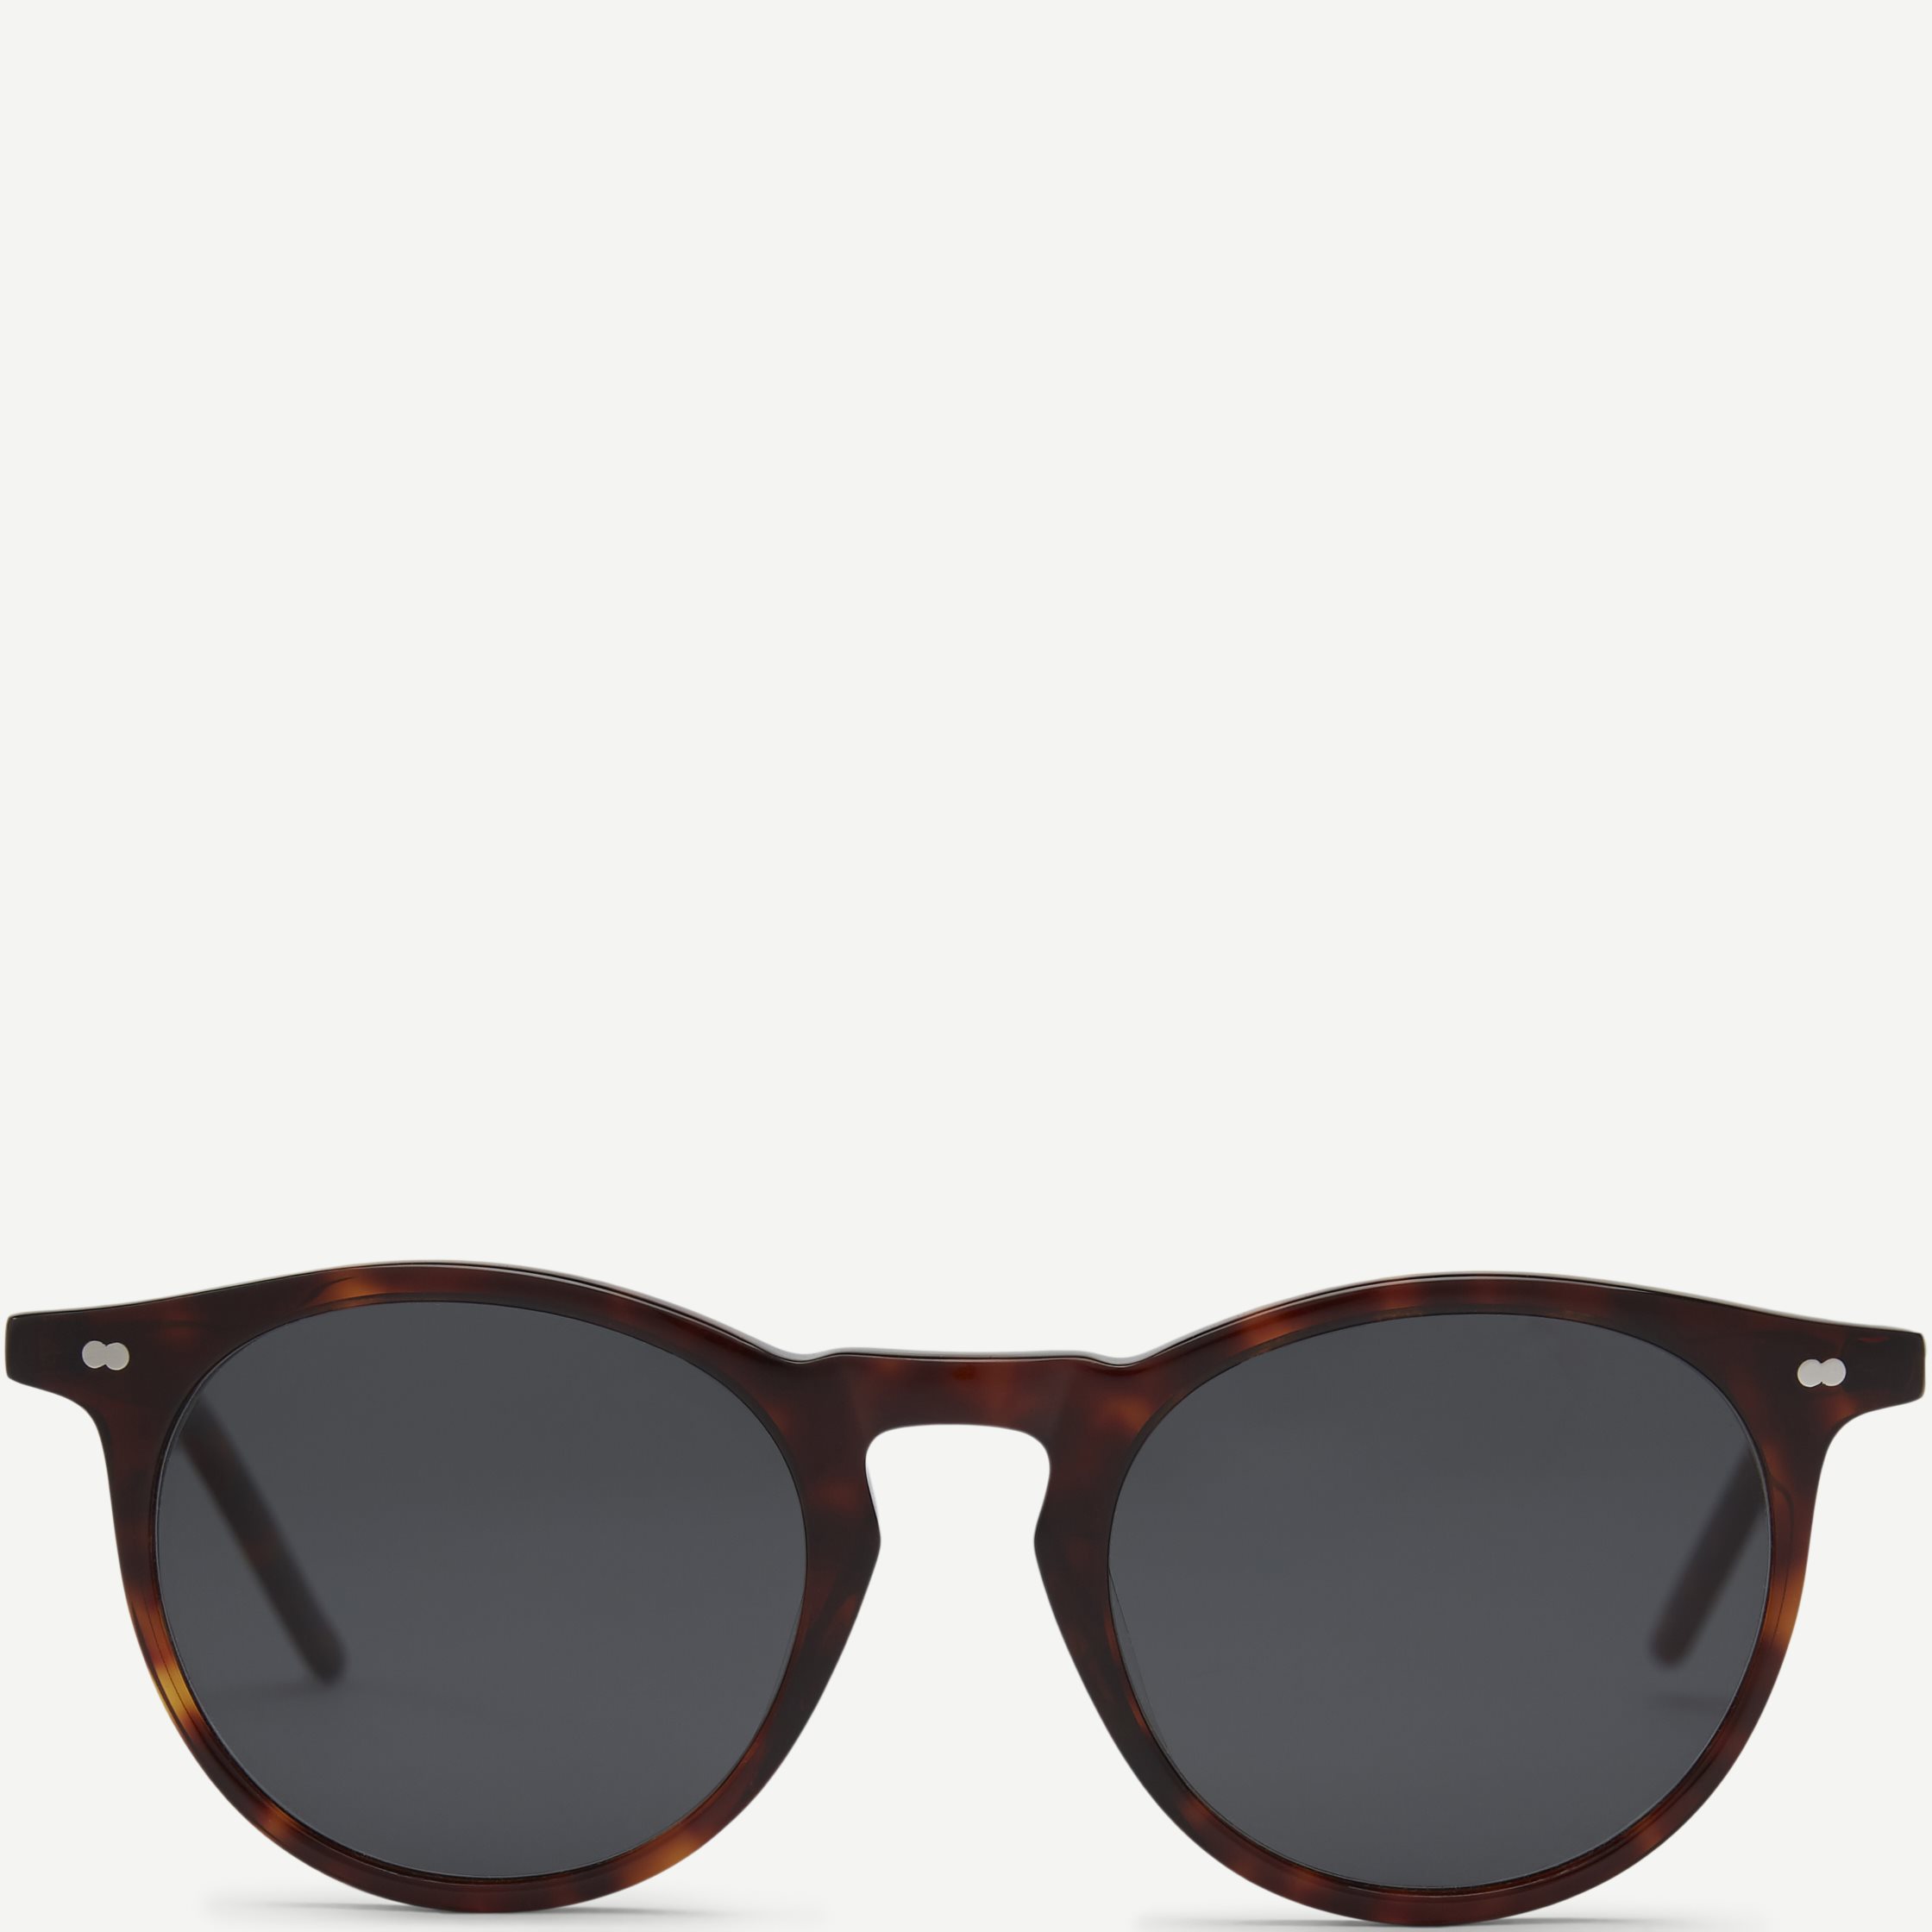 Paloma Sunglasses - Accessories - Brown